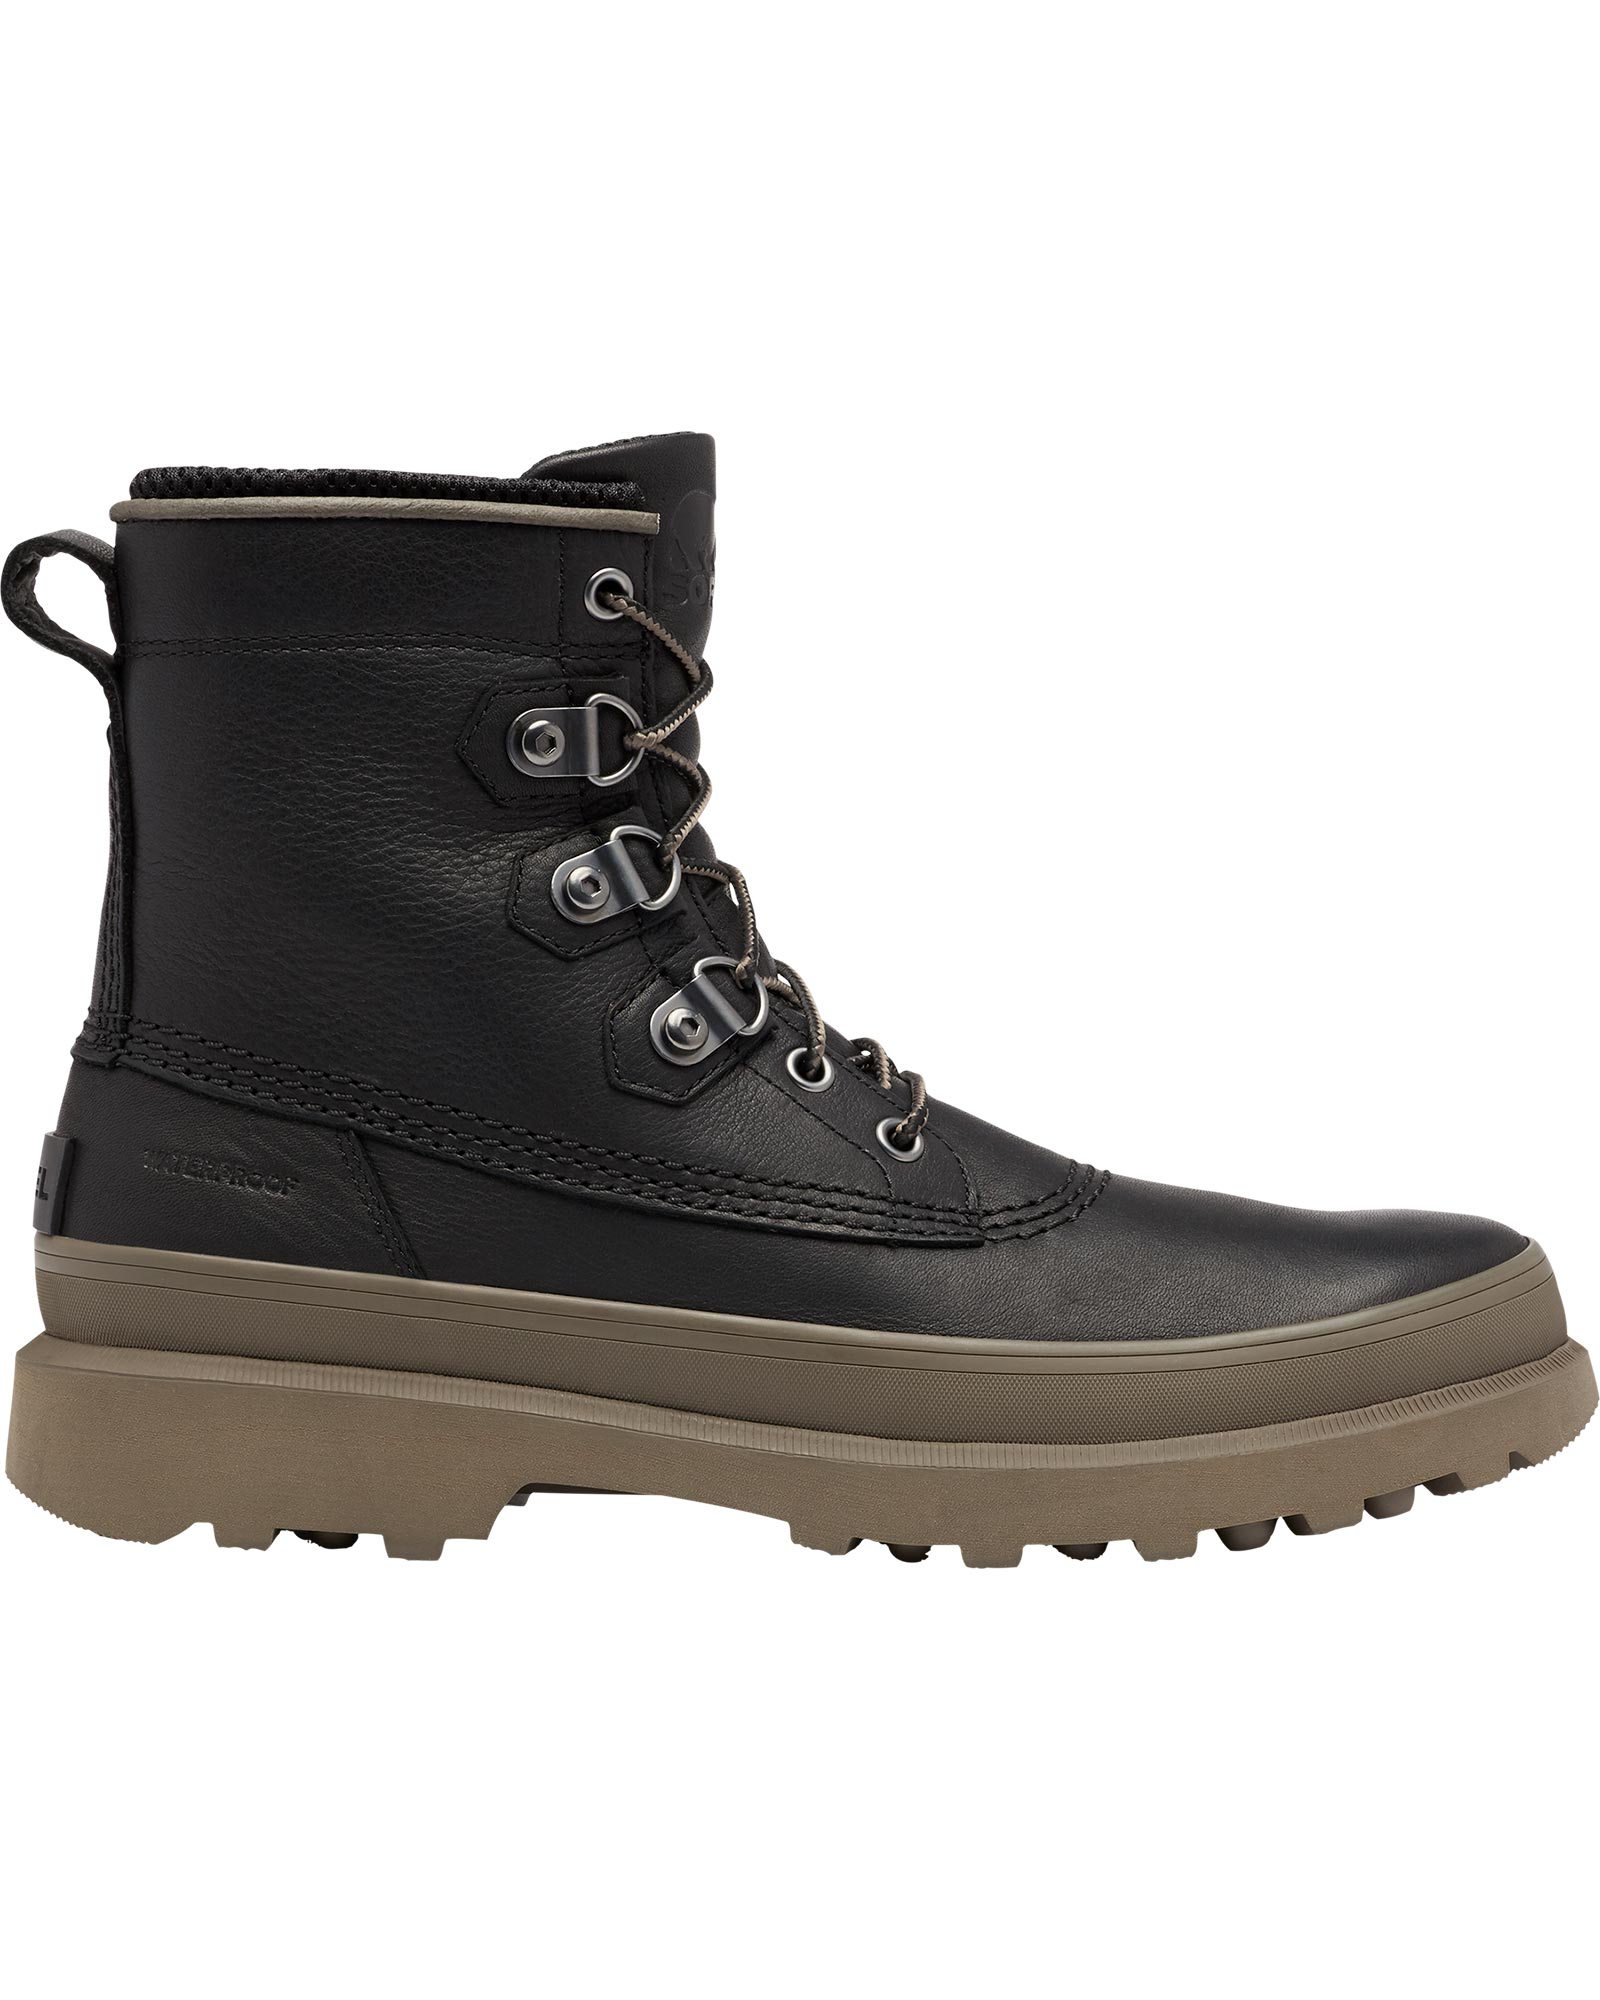 Sorel Caribou Street Men’s Waterproof Snow Boots - black UK 7